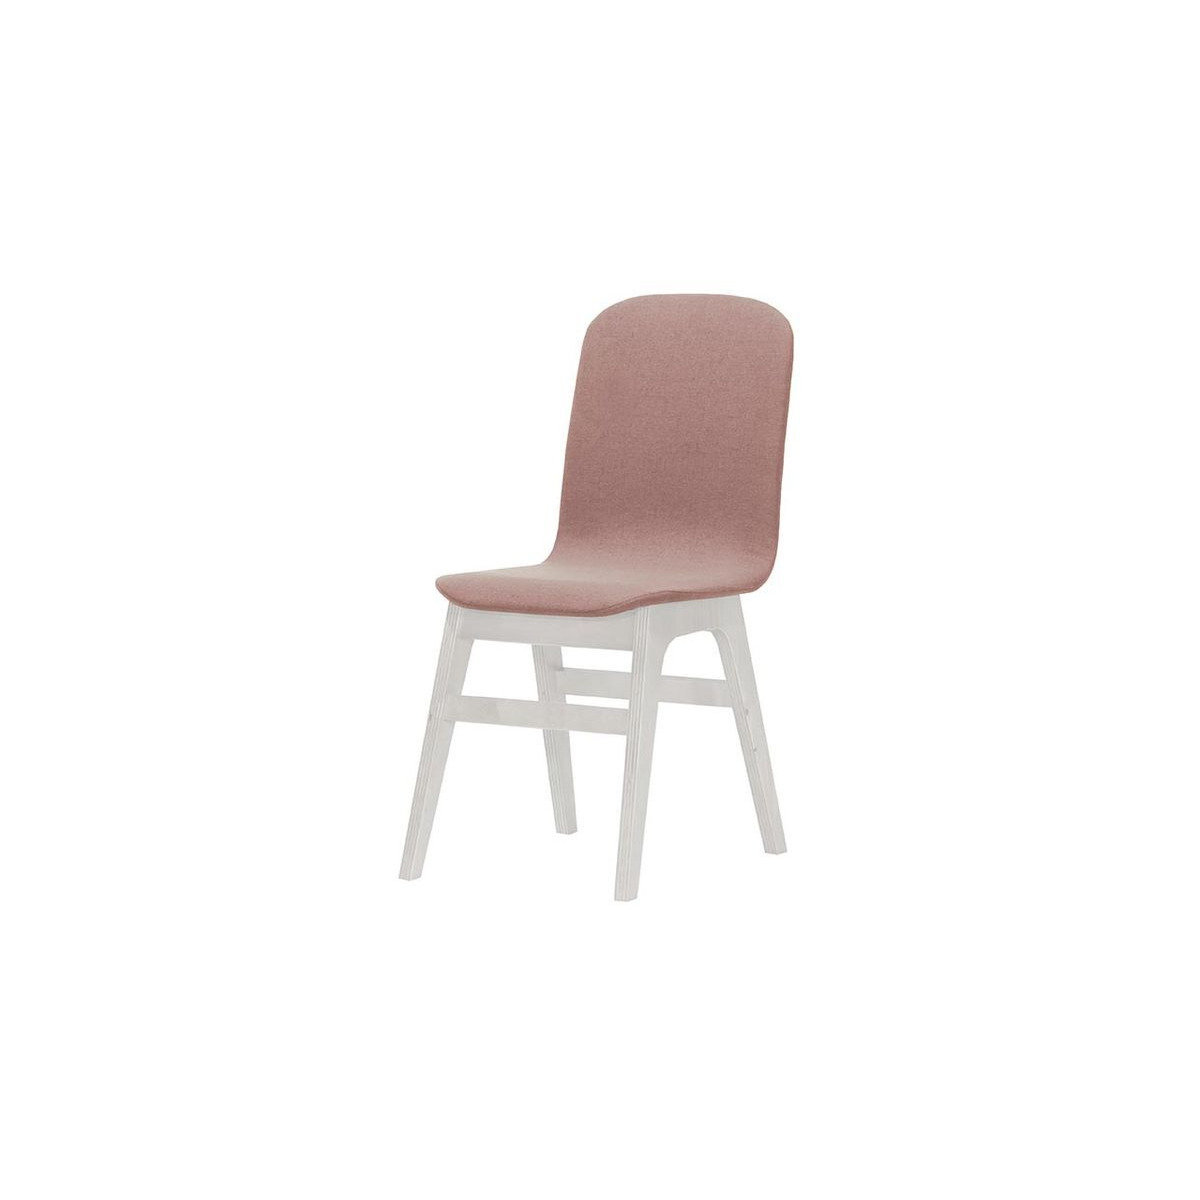 Capita Dining Chair, pastel pink, Leg colour: white - image 1